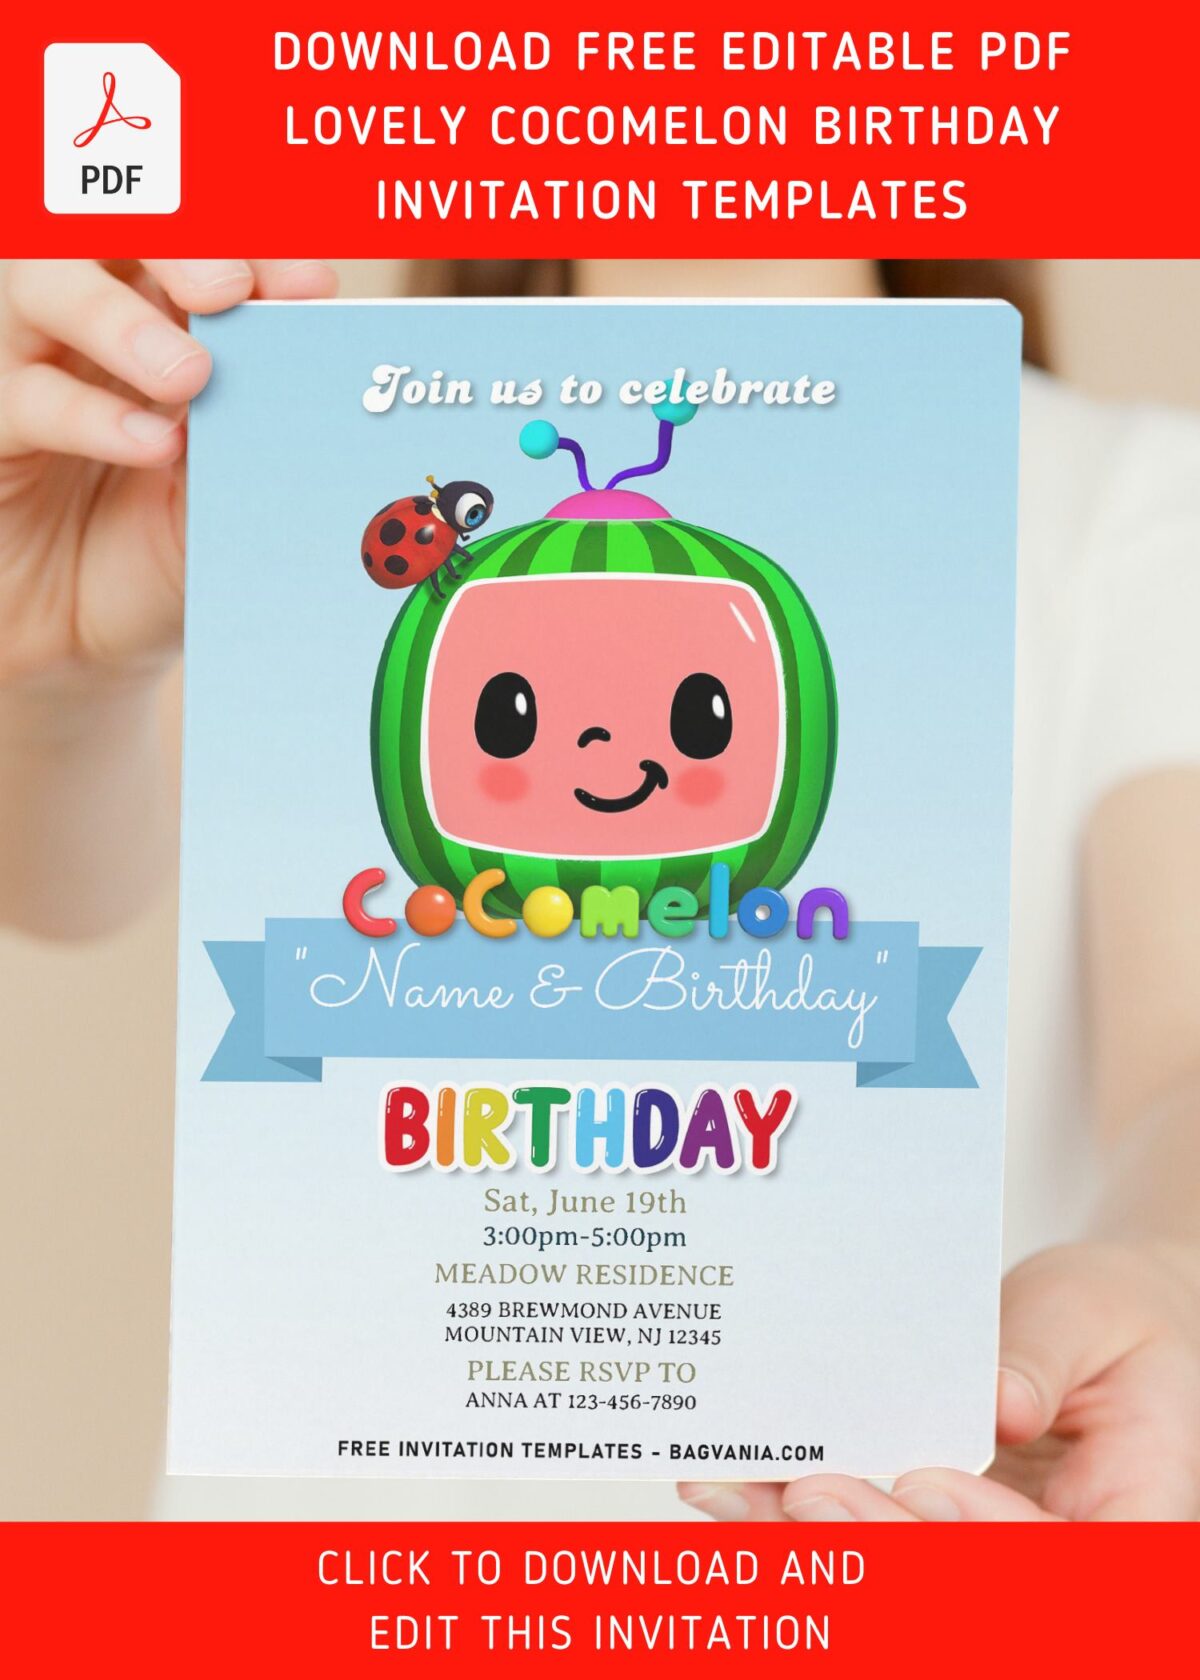 (Free Editable PDF) Bright & Cheerful Cocomelon Birthday Invitation Templates with colorful text